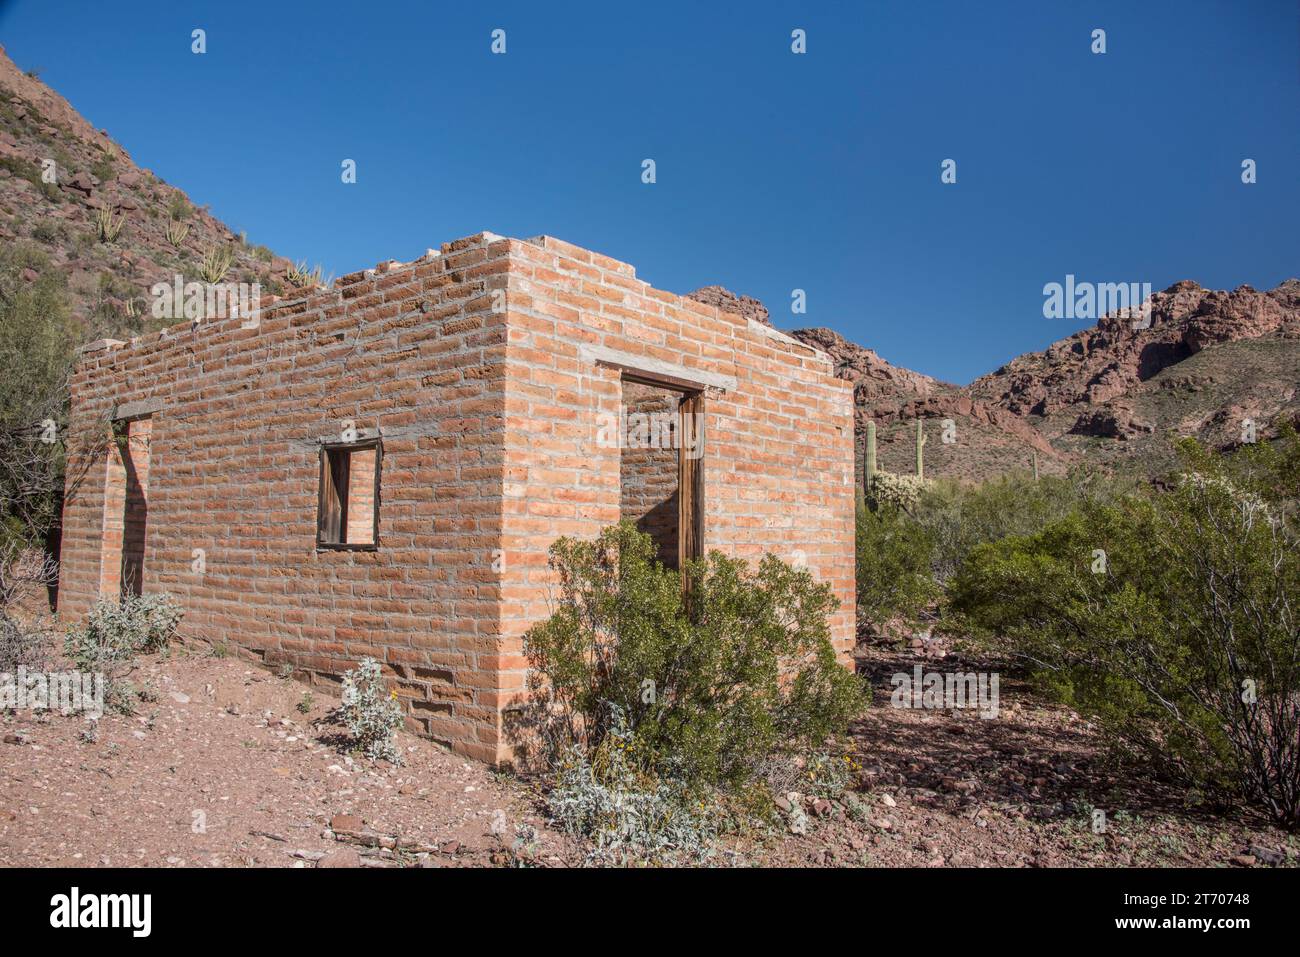 Historische Ranchero Ruine, lehmhaus, Miller Ranch, Alamo Canyon, Sonora Wüste, Orgel Pipe Cactus National Monument, Ajo, Arizona, USA Stockfoto